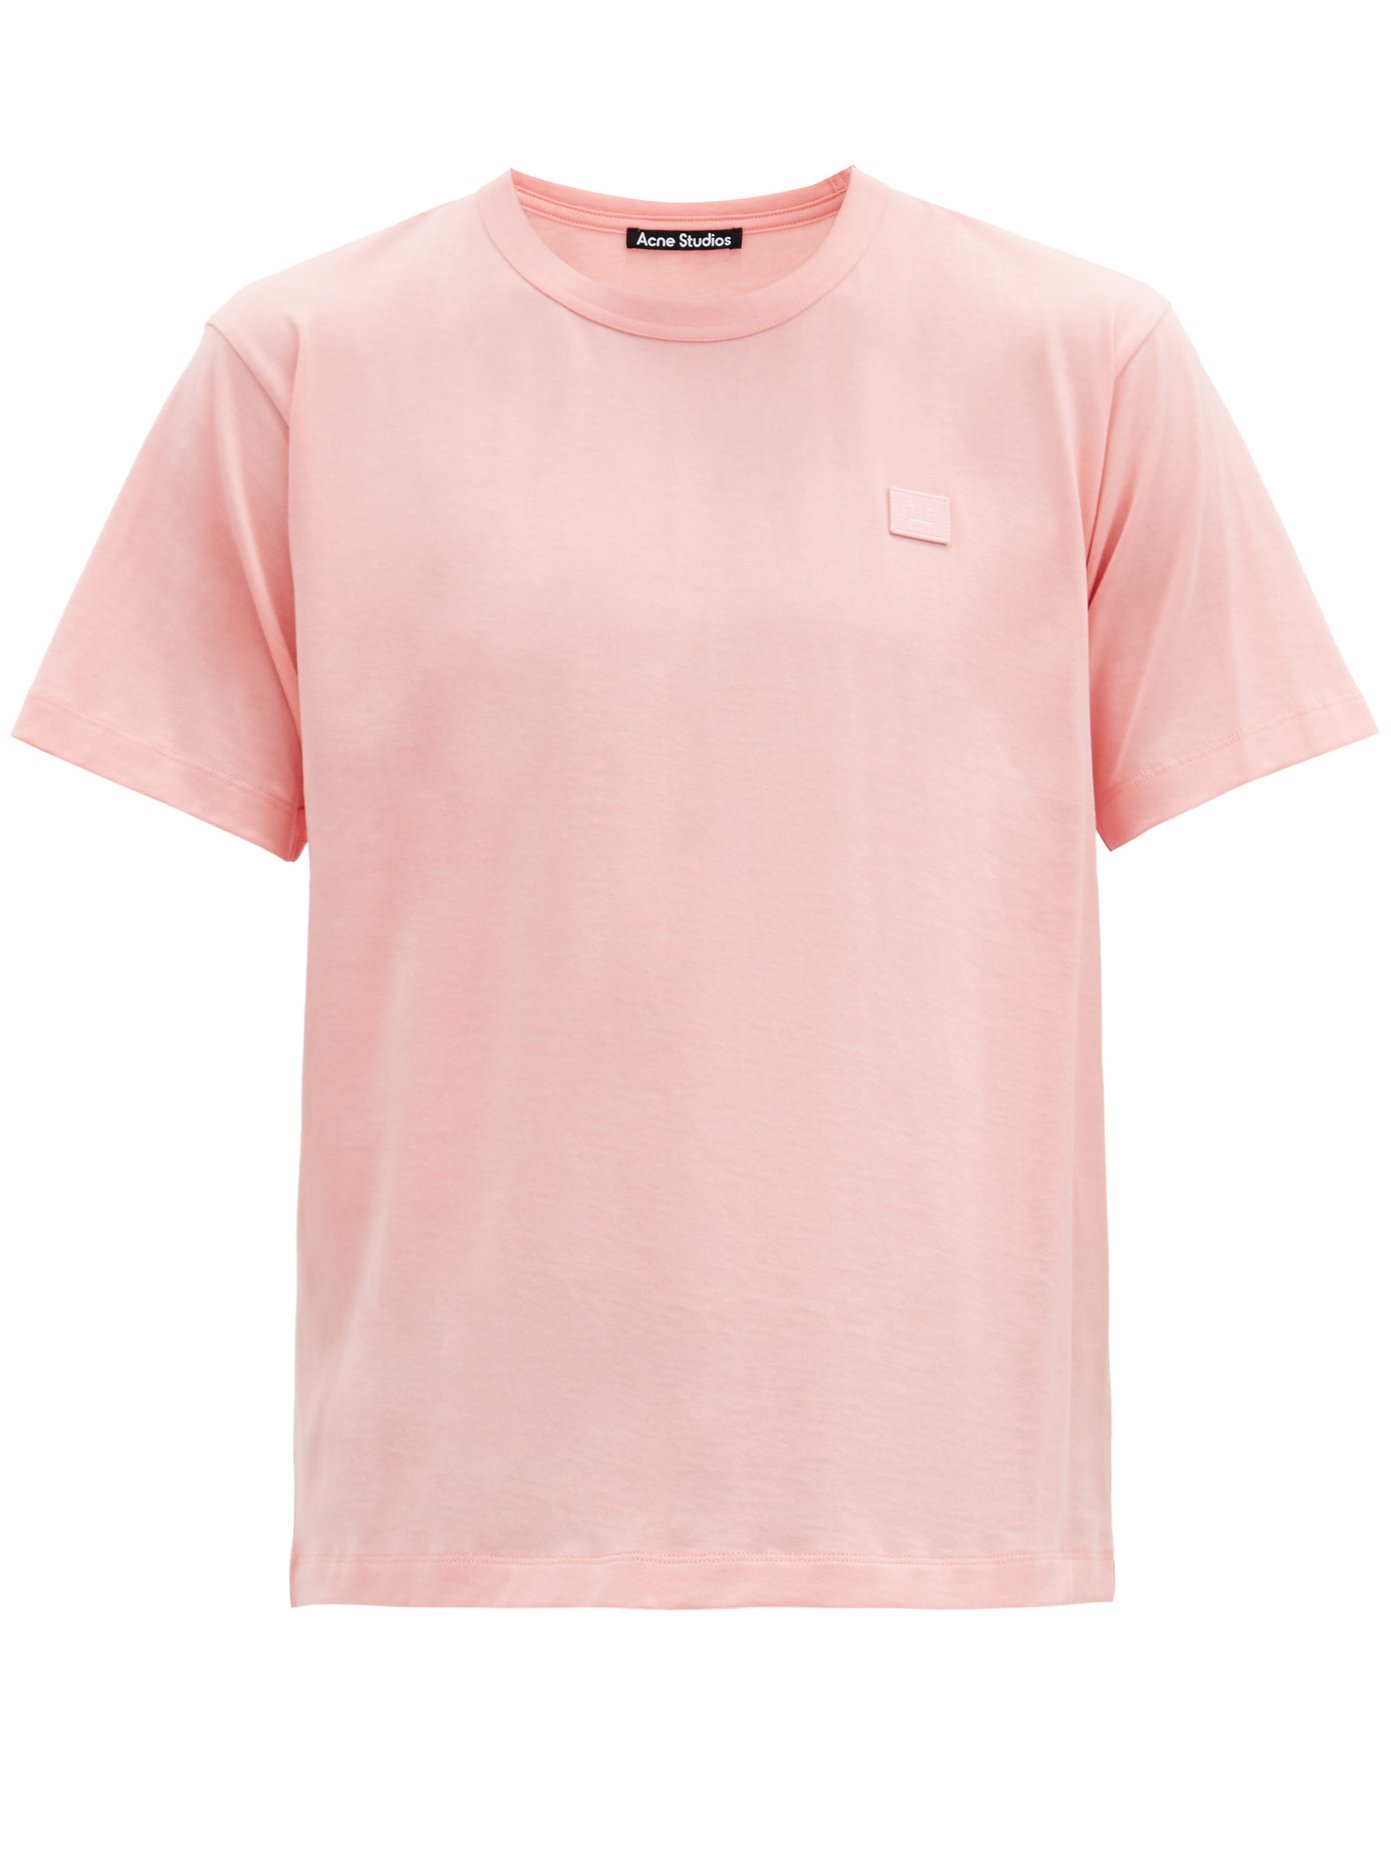 acne studios pink shirt